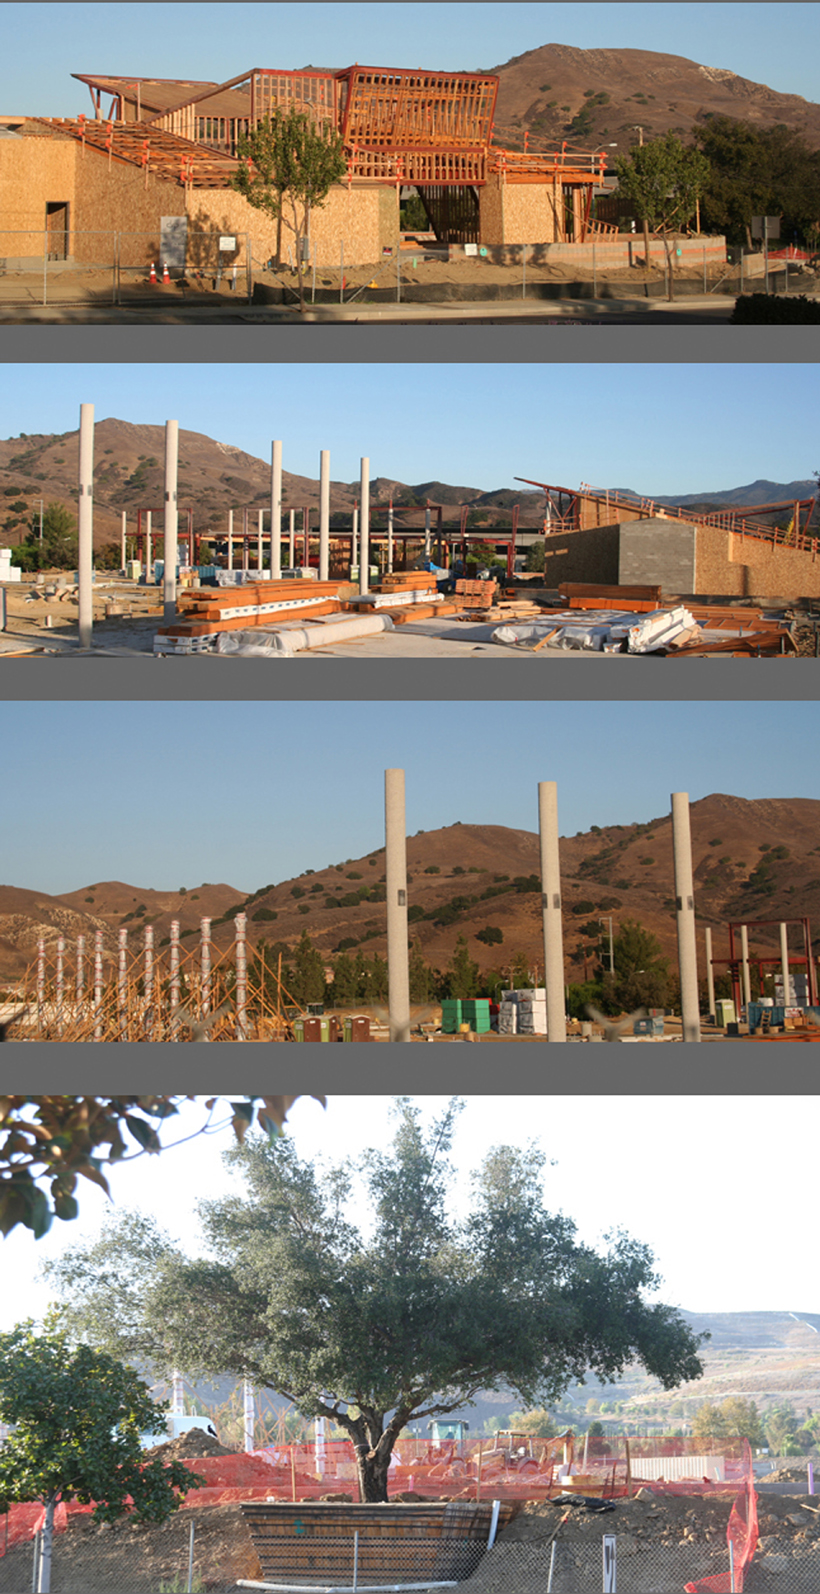 The Summit At Calabasas - LEED Consulting, ENR architects, Granbury, TX 76049 - Foundations, framing, oak transplants